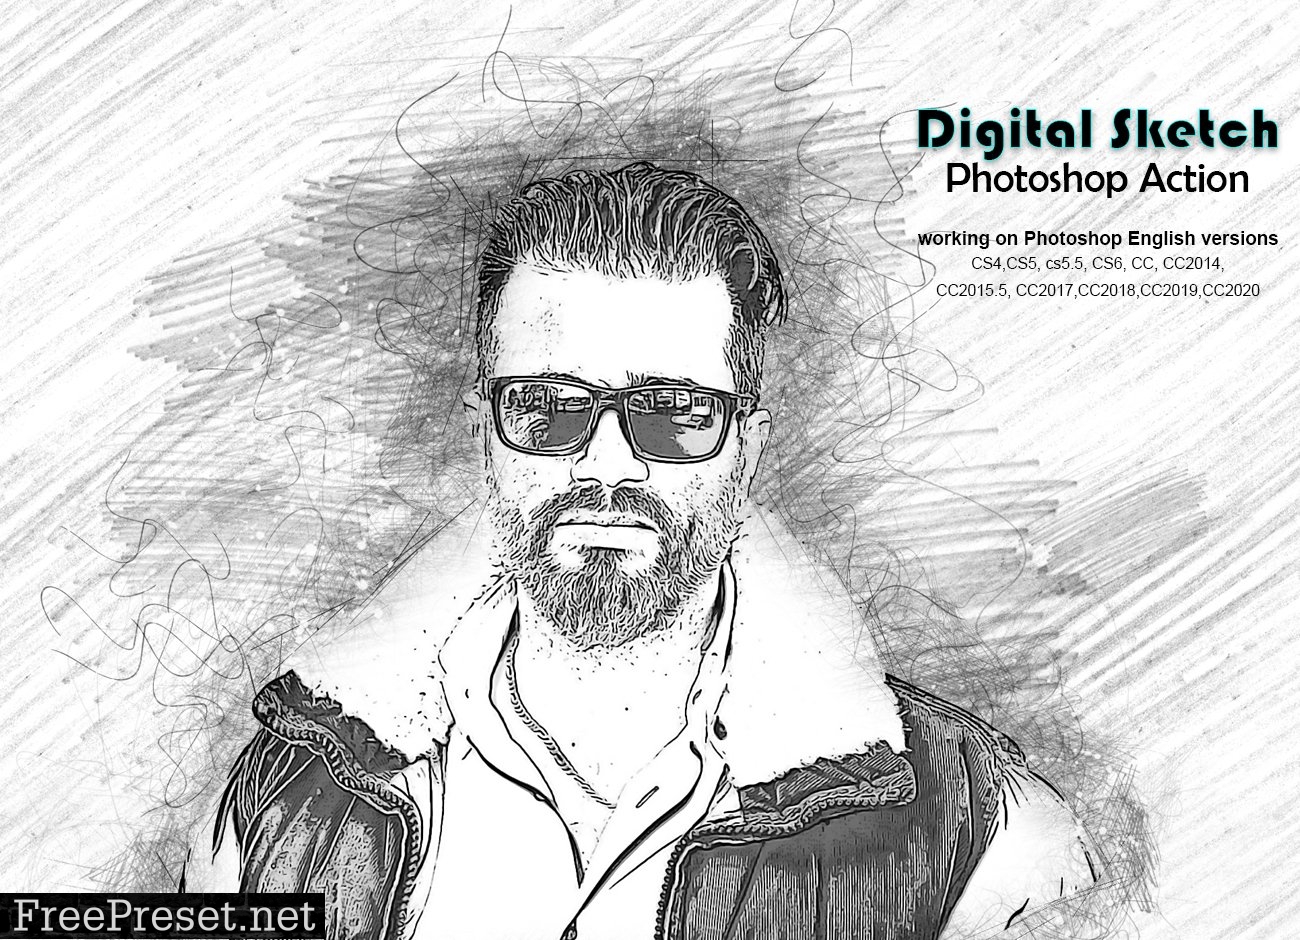 Digital Sketch Photoshop Action 5218660